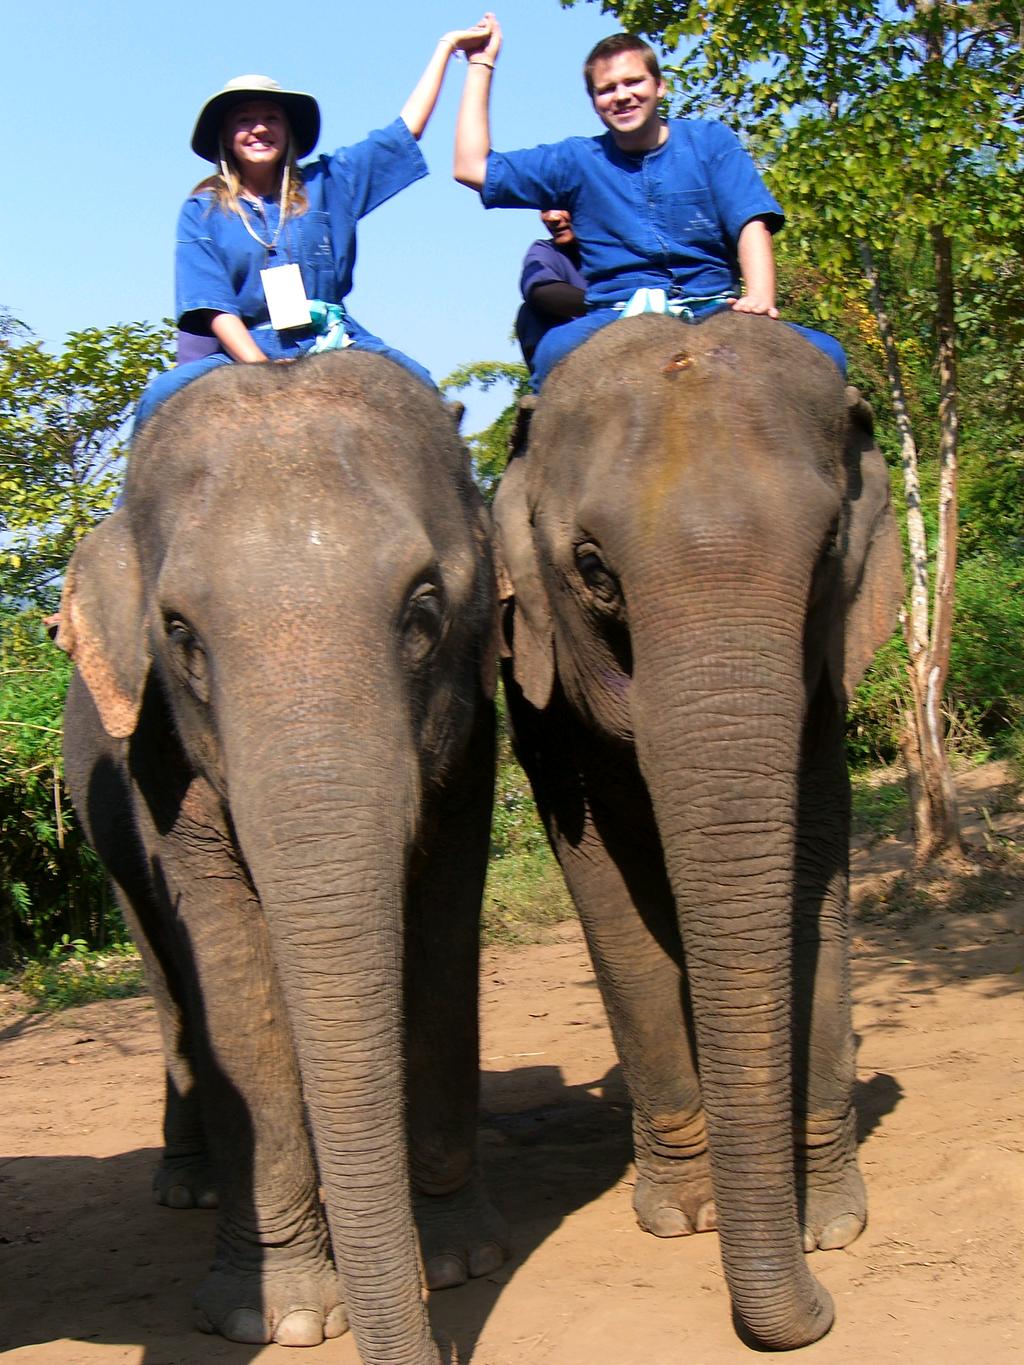 quad*ru*ped (n.) While we were in Thailand, Mr. Carmona and I rode elephants.